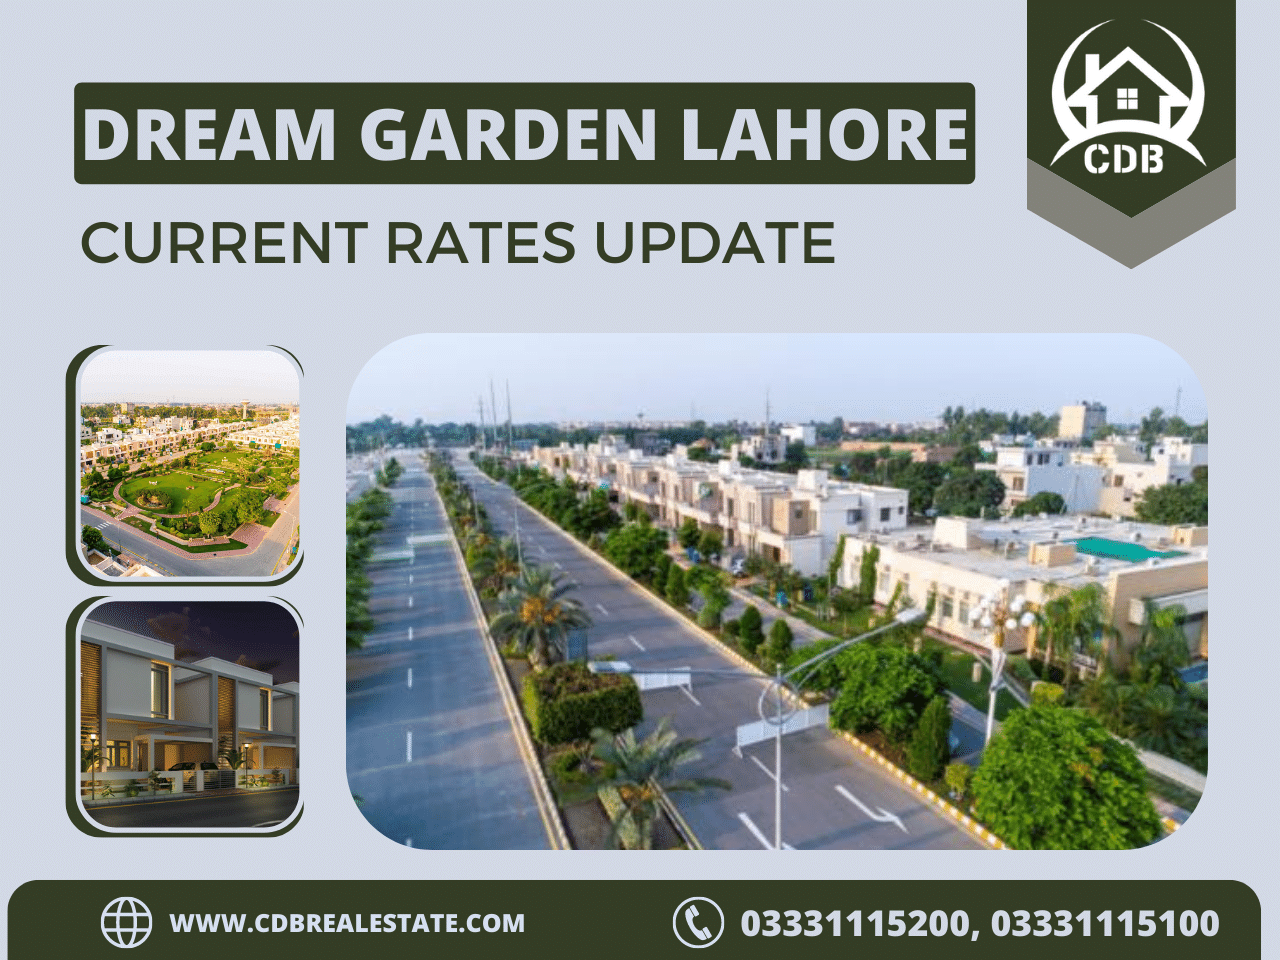 Dream Garden Lahore